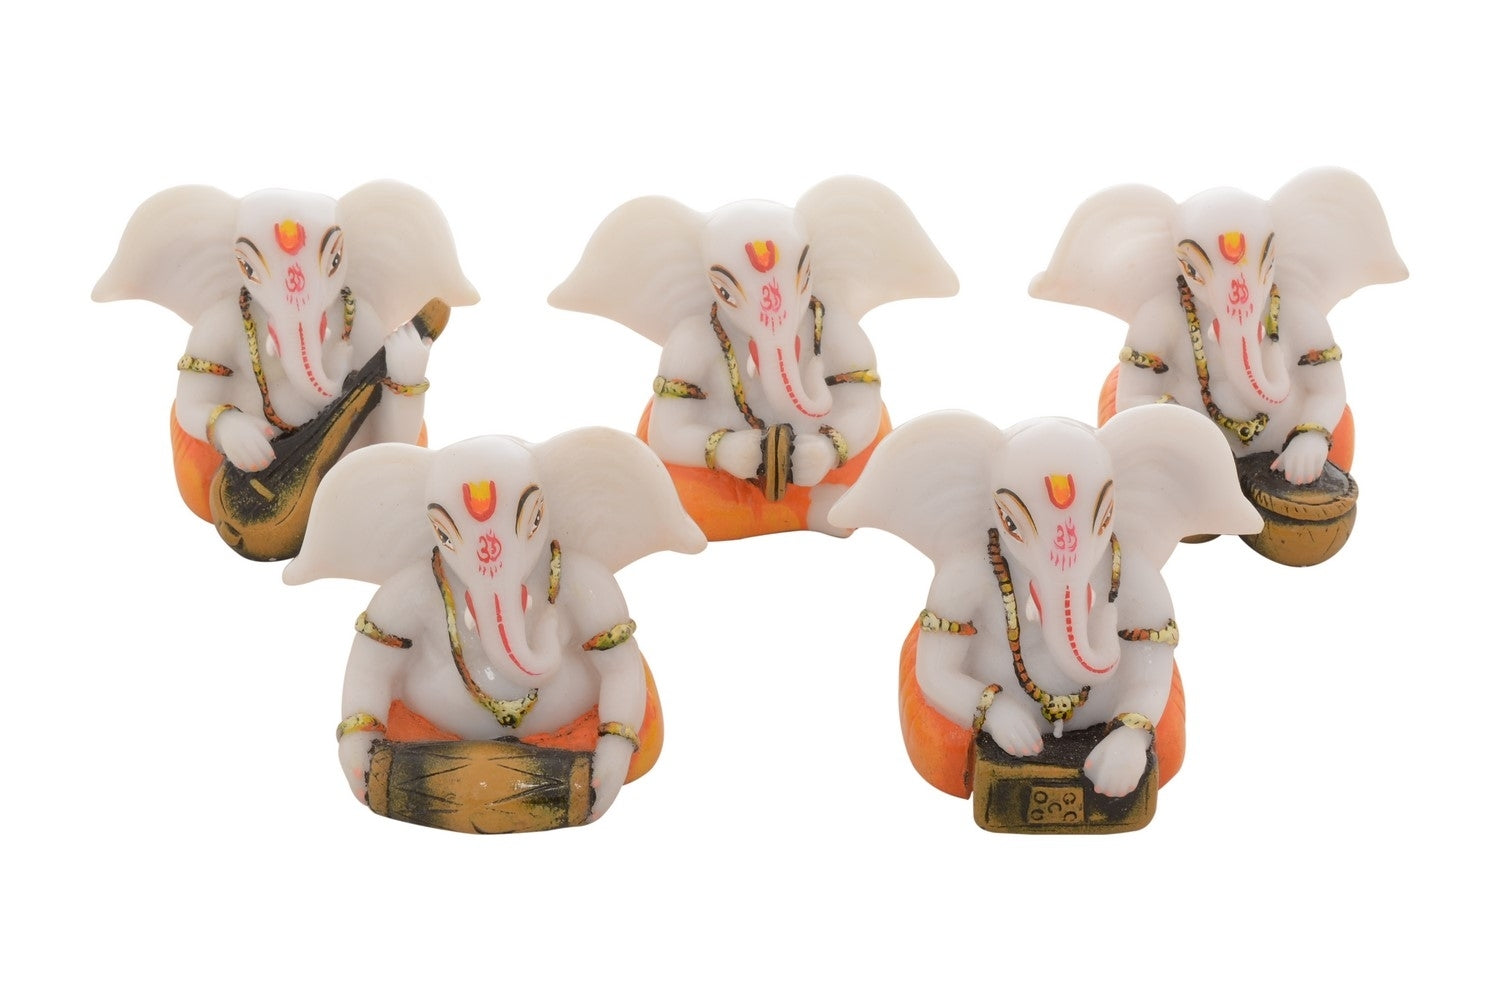 Set of 5 Lord Ganesha playing Musical Instruments